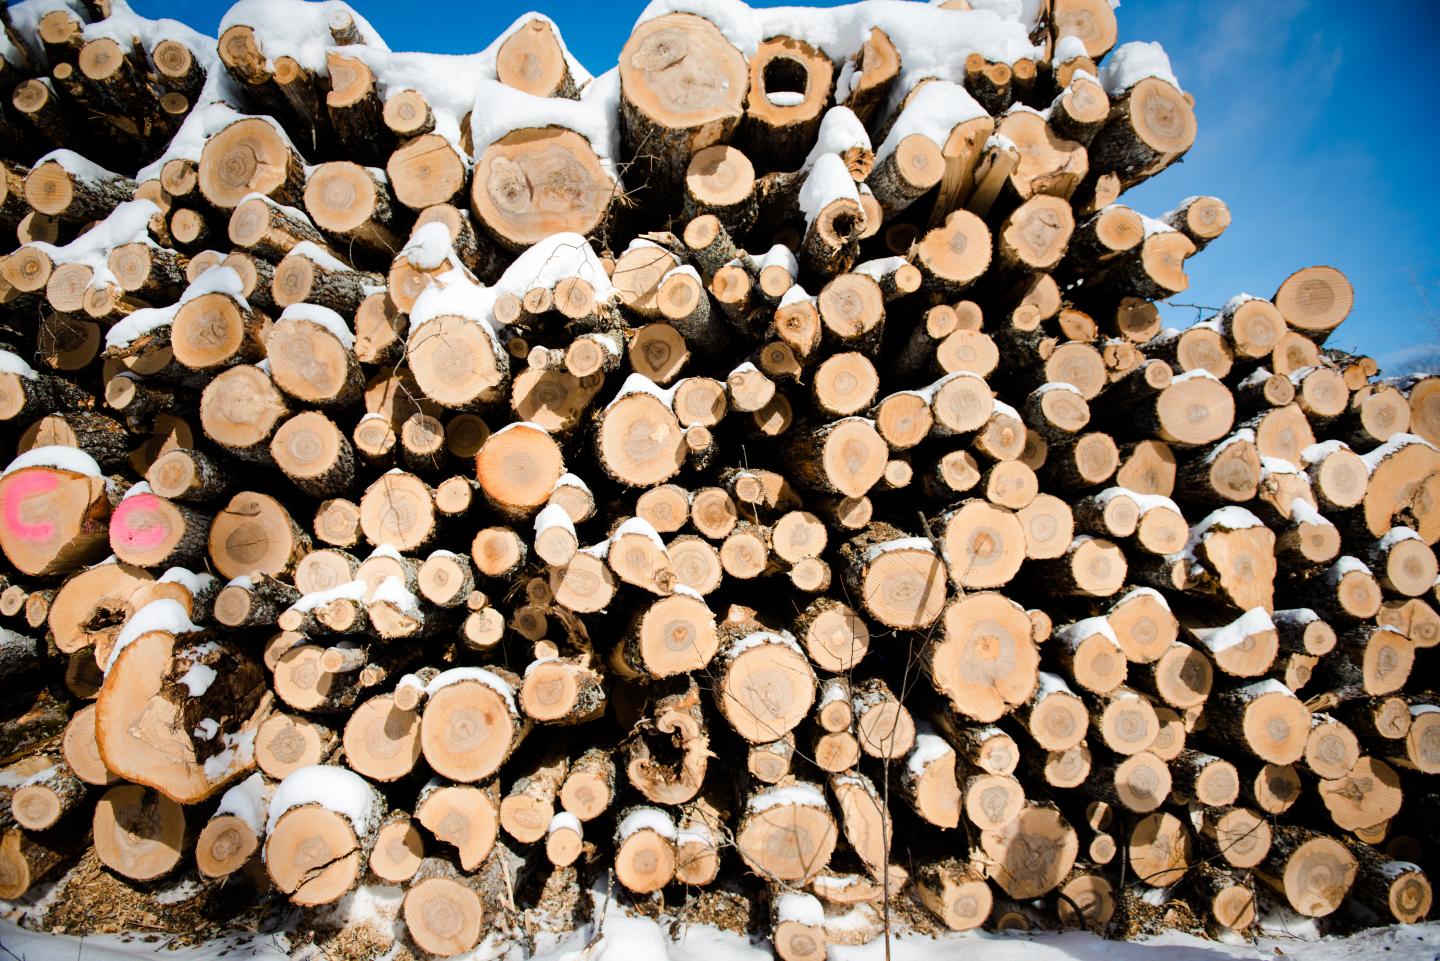 Whole-Tree Logging and Biodiversity